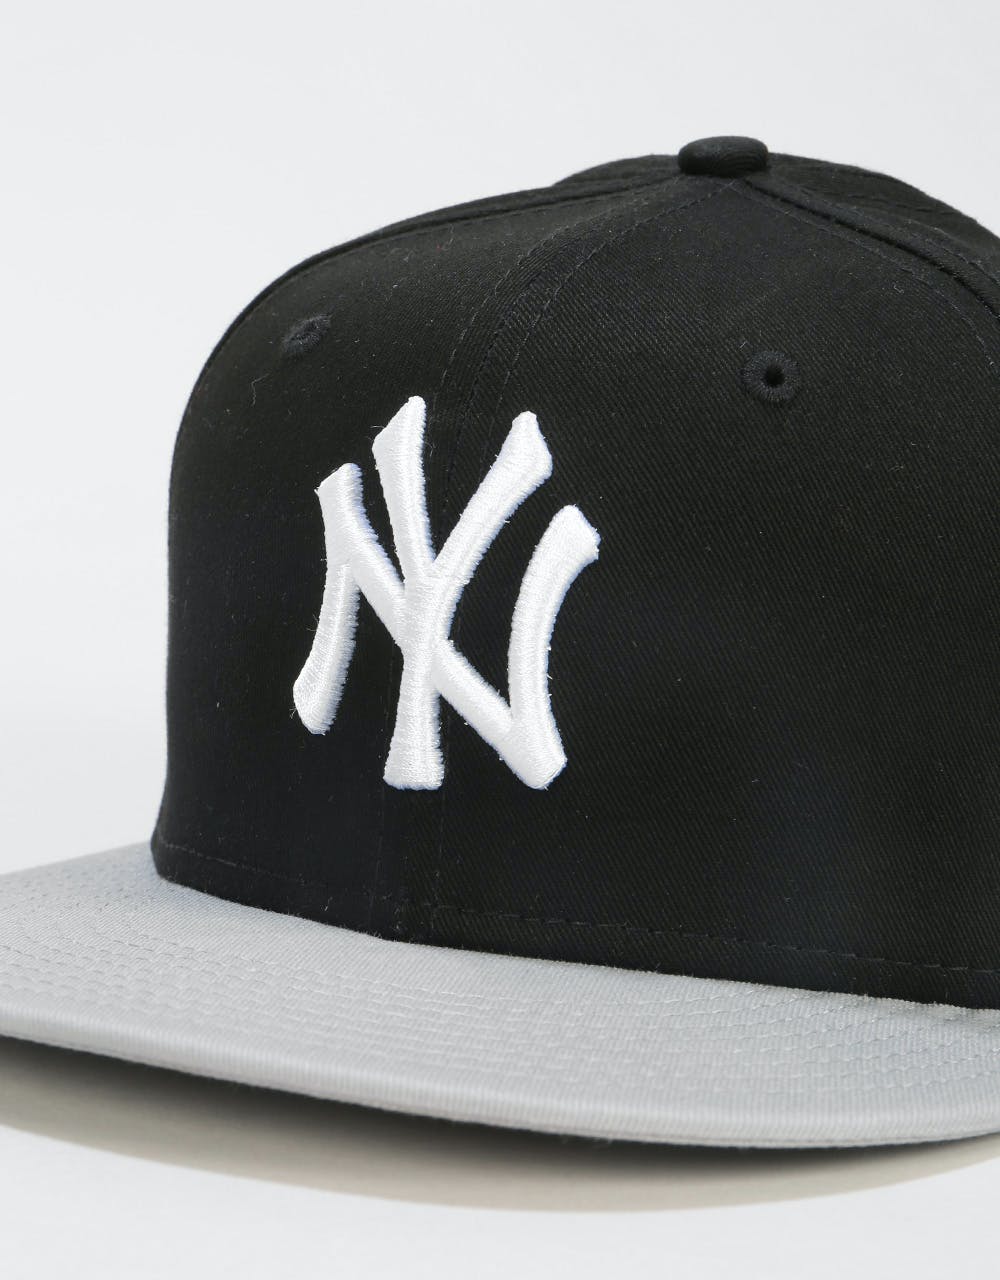 New Era 9Fifty MLB New York Yankees Cotton Block Snapback Cap - Black/